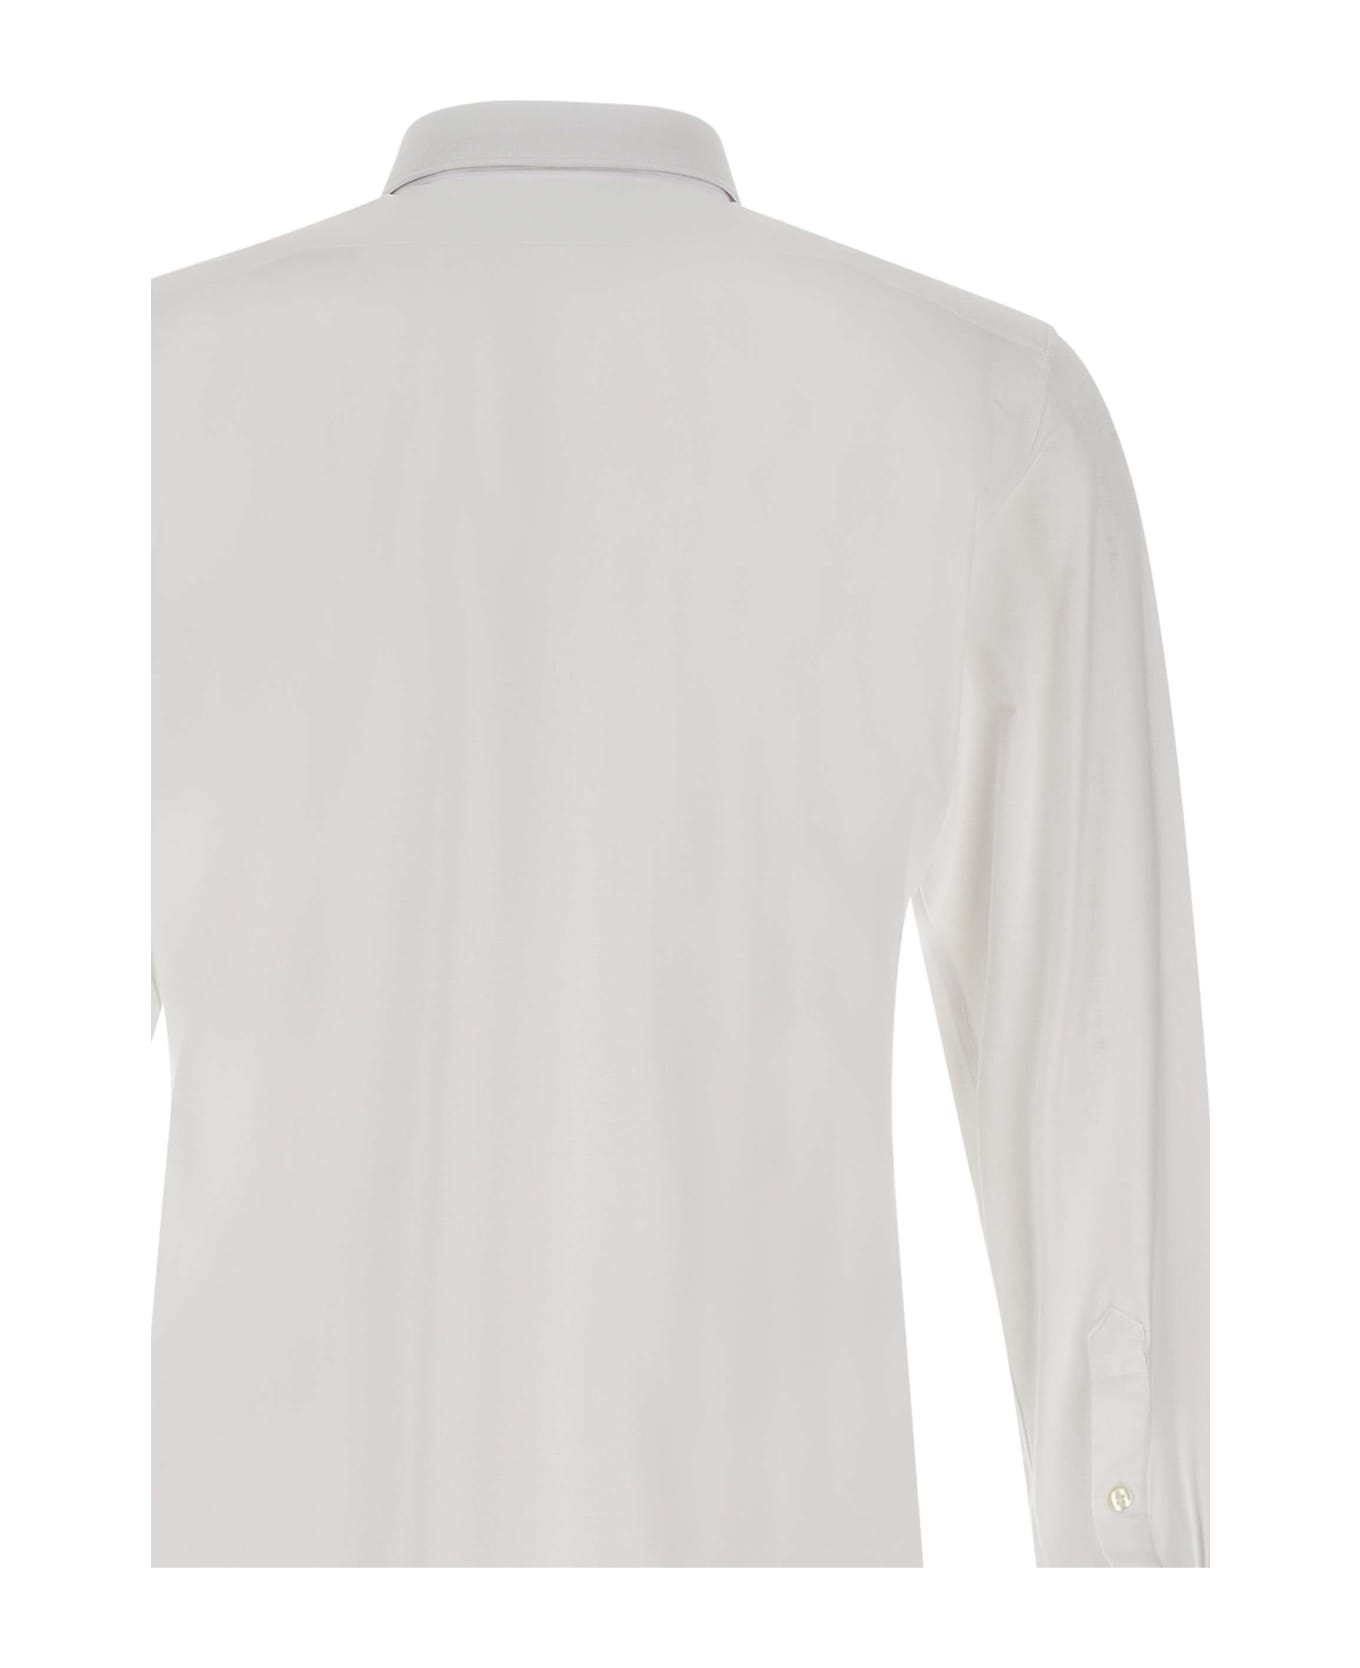 RRD - Roberto Ricci Design 'oxford Open' Shirt - White